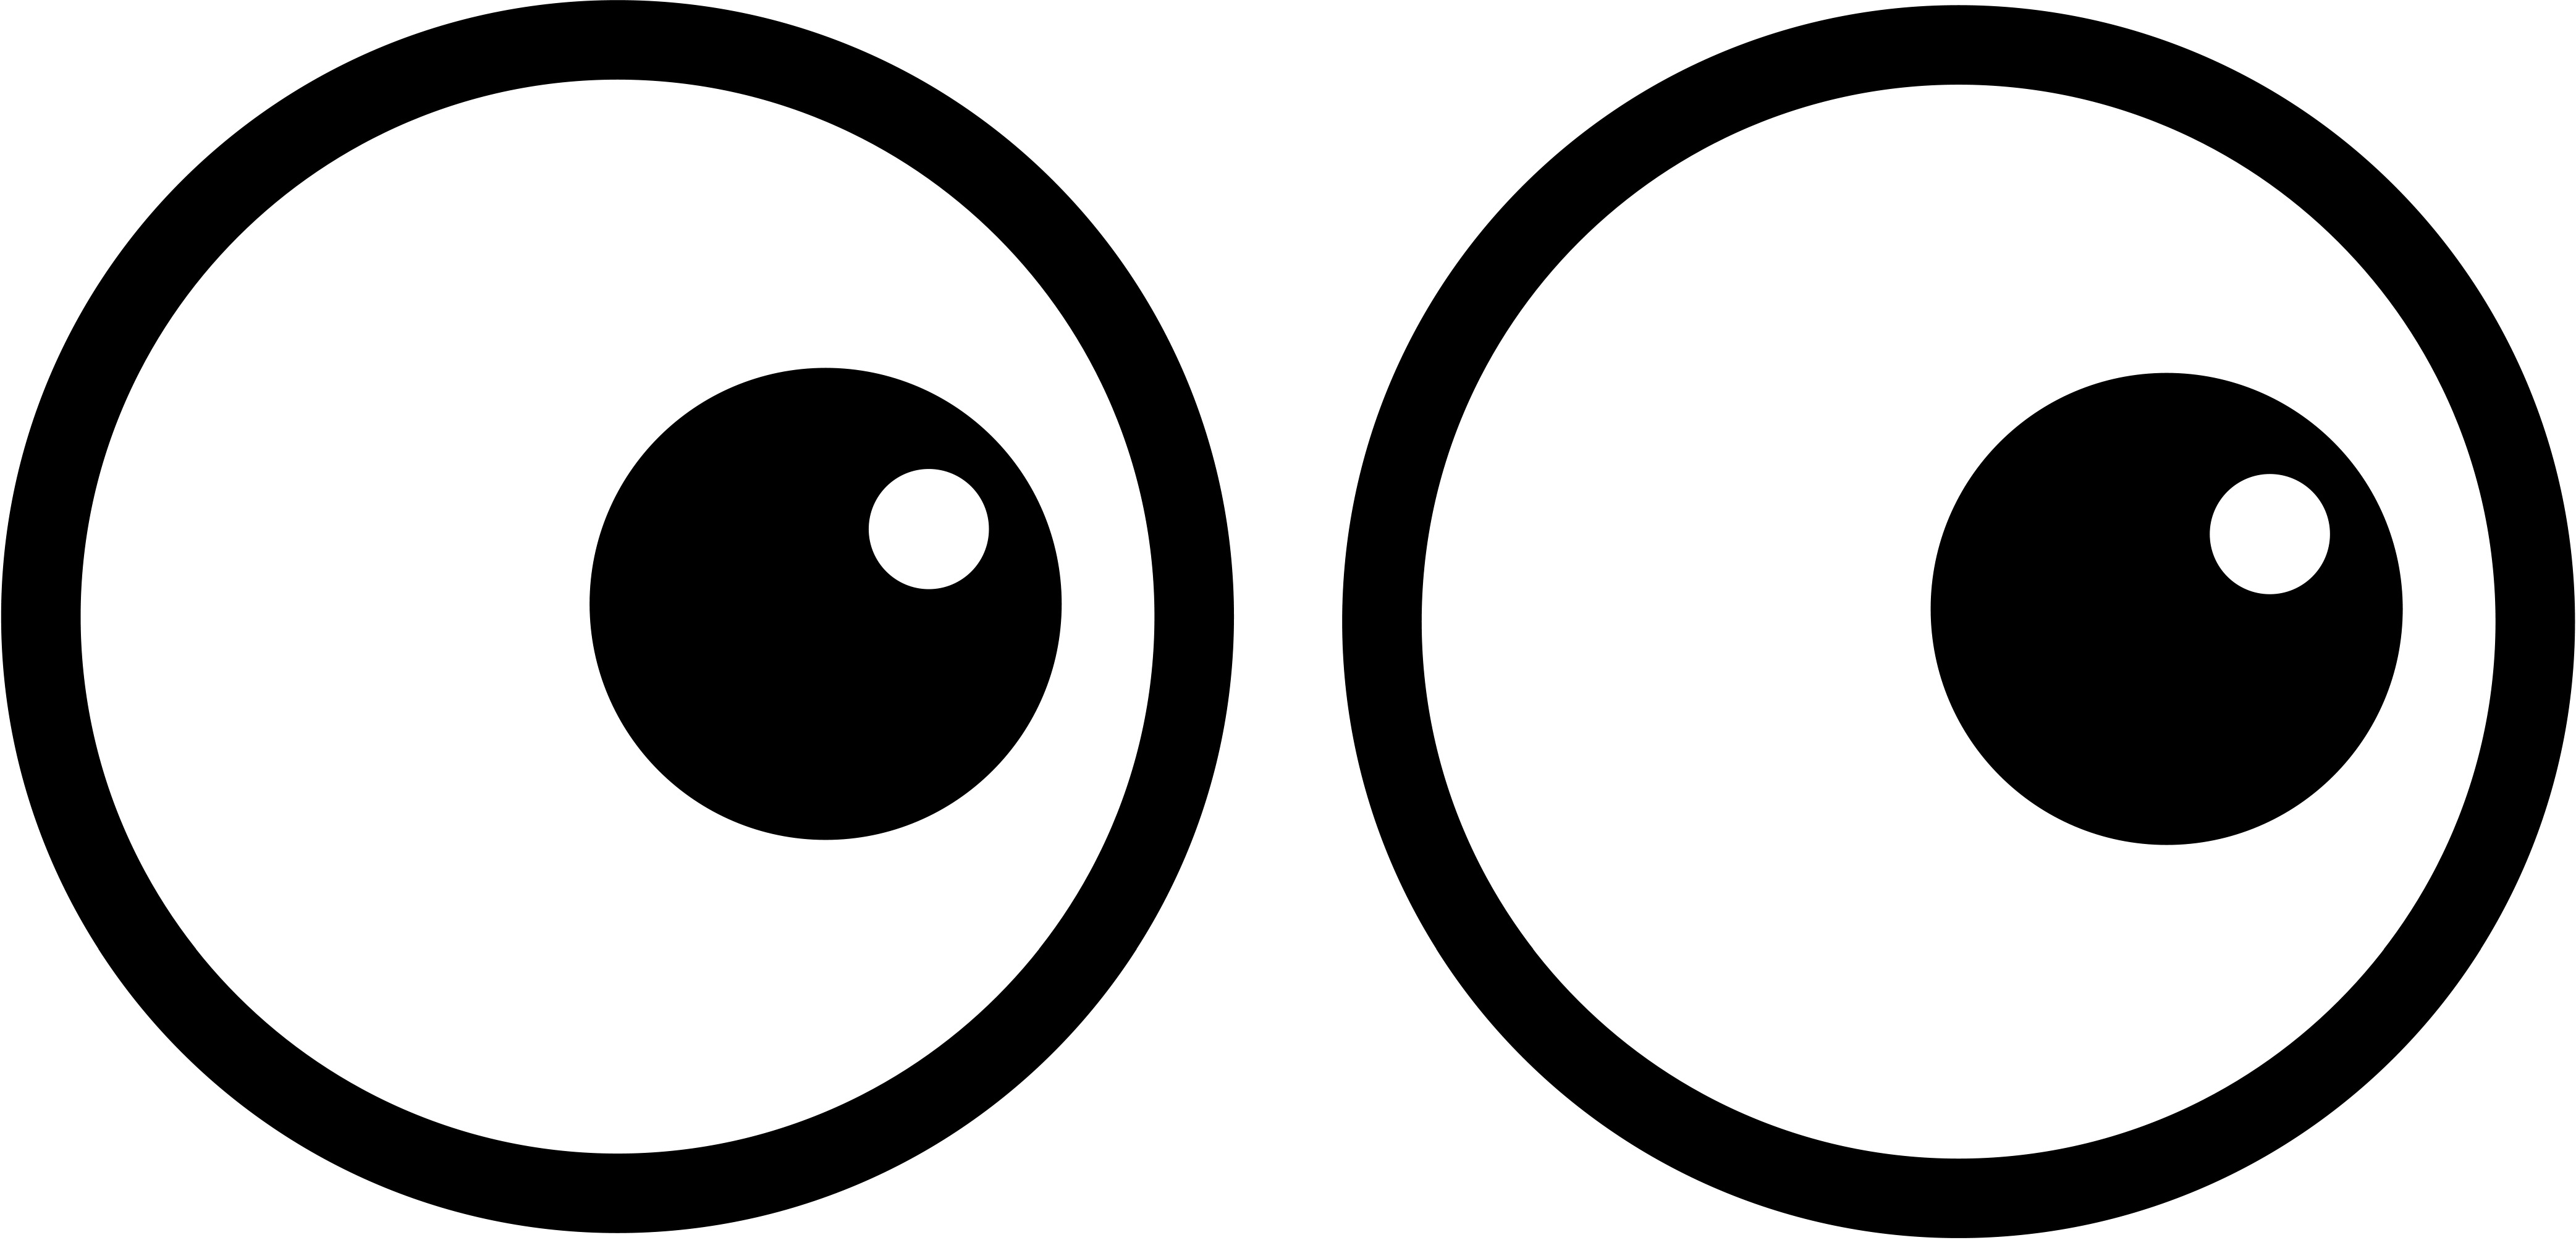 Eyeball Image Clip Art